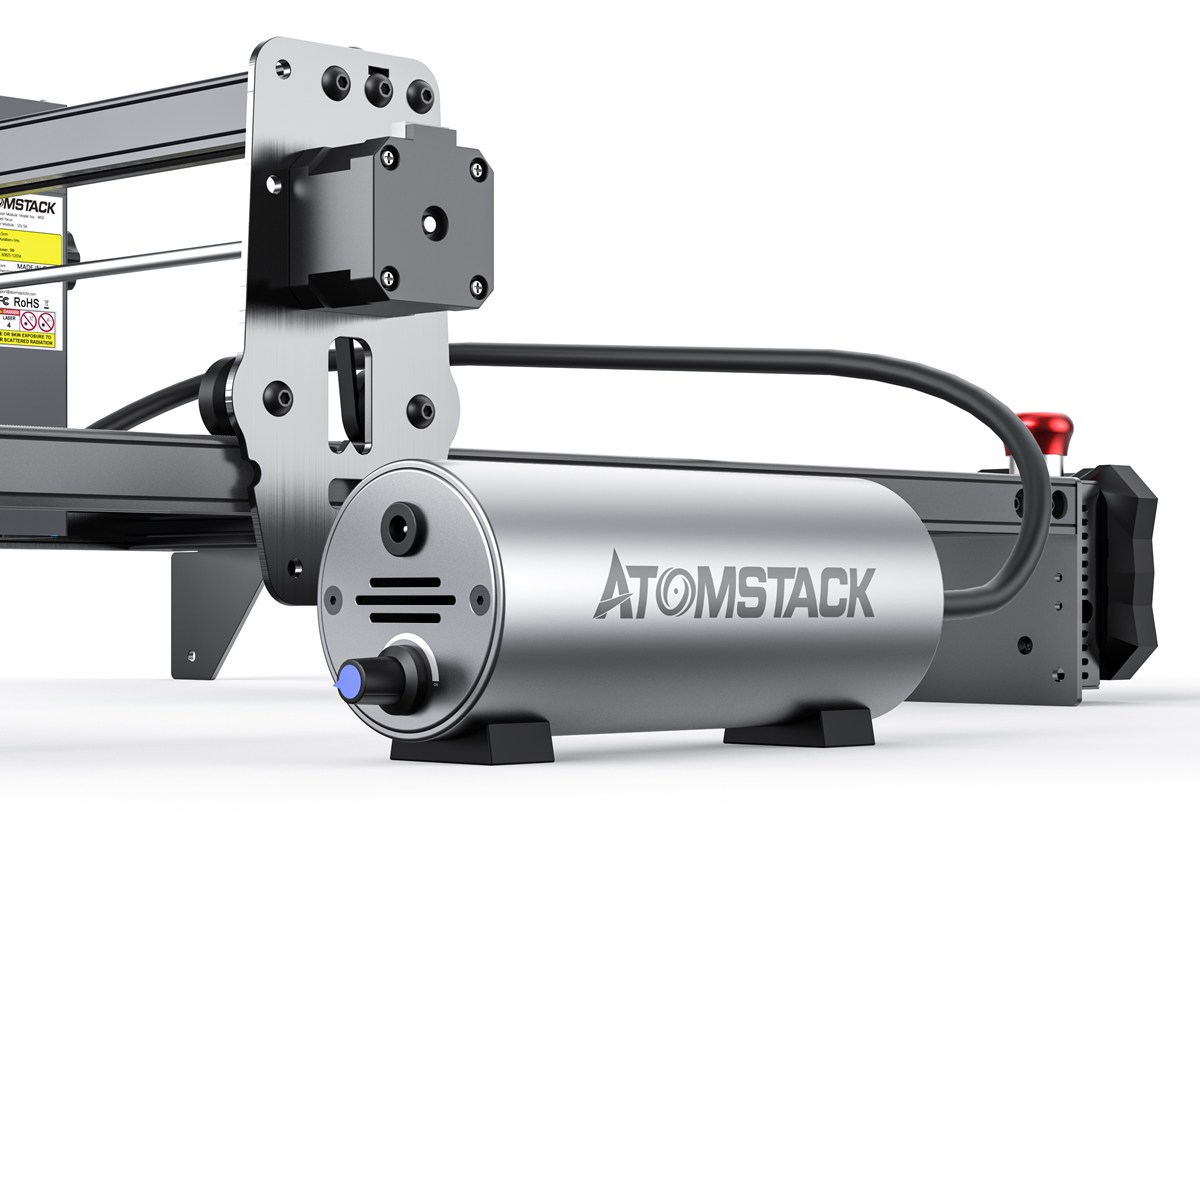 Atomstack-Air-Assist-System-for-Laser-Engraving-Machine-Laser-Cutting-Engraving-Air-assisted-Accesso-1932834-11